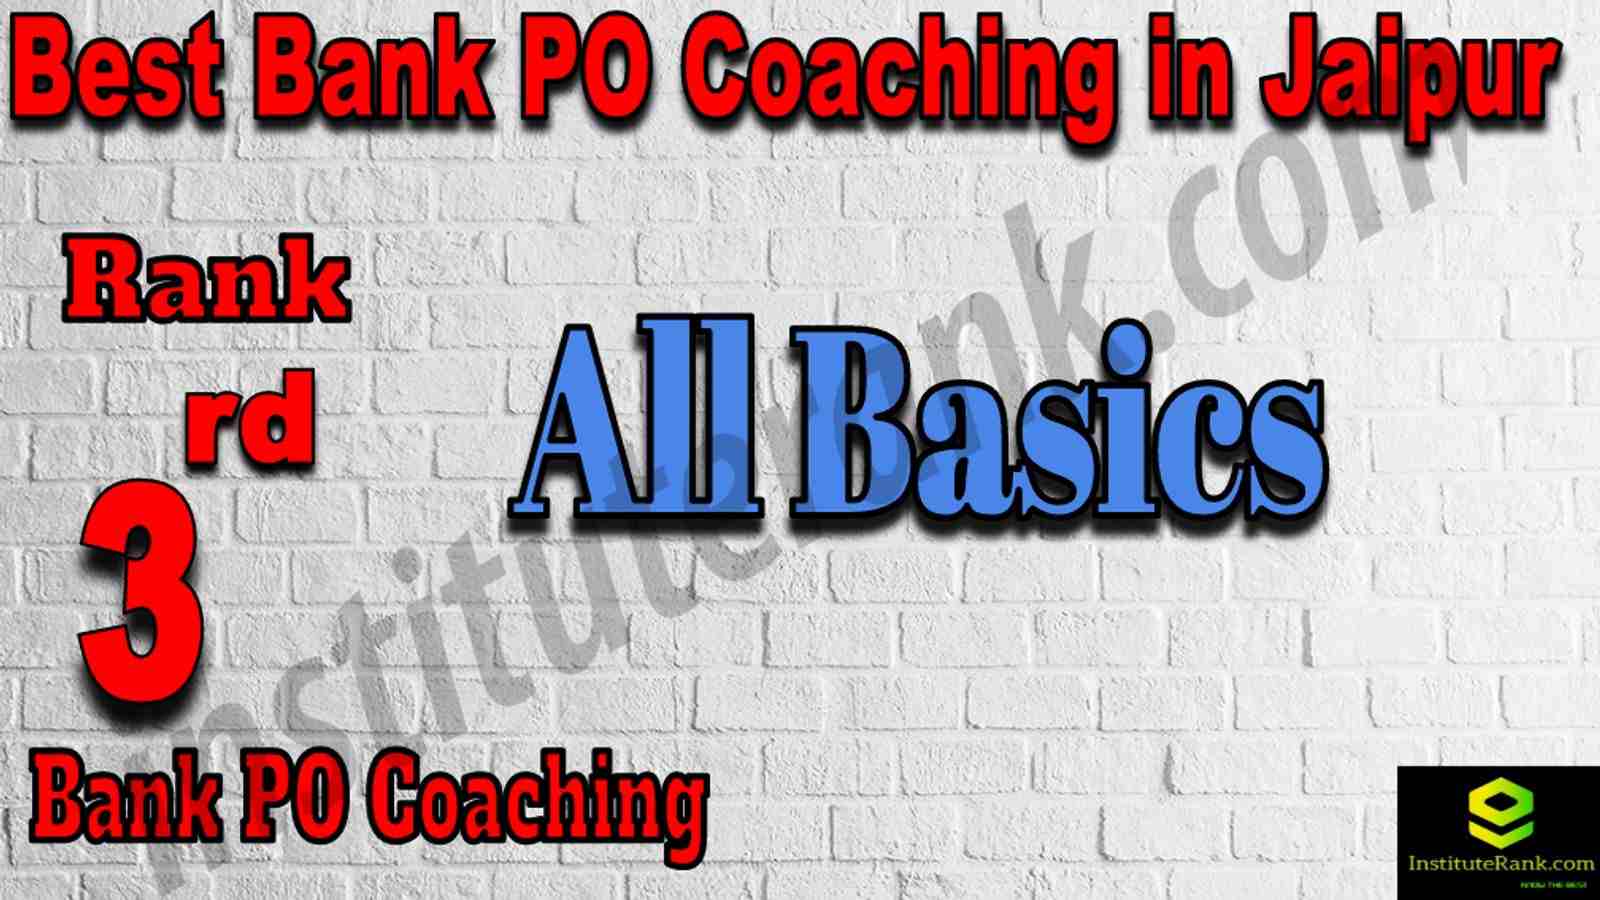 3rd Best Bank PO Coaching in Jaipur